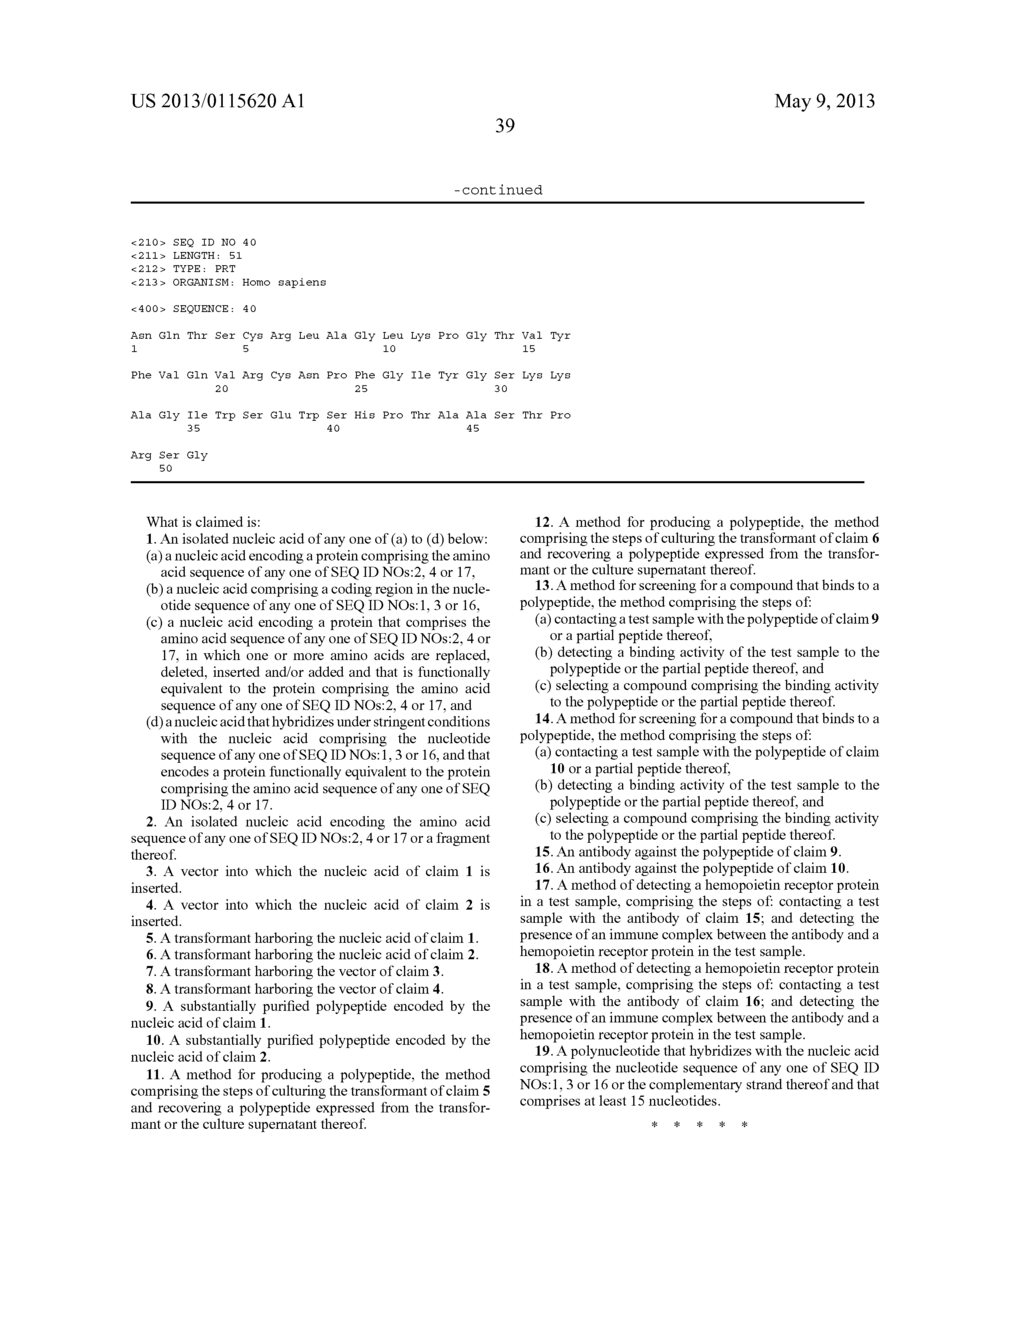 Novel Hemopoietin Receptor Protein, NR10 - diagram, schematic, and image 54